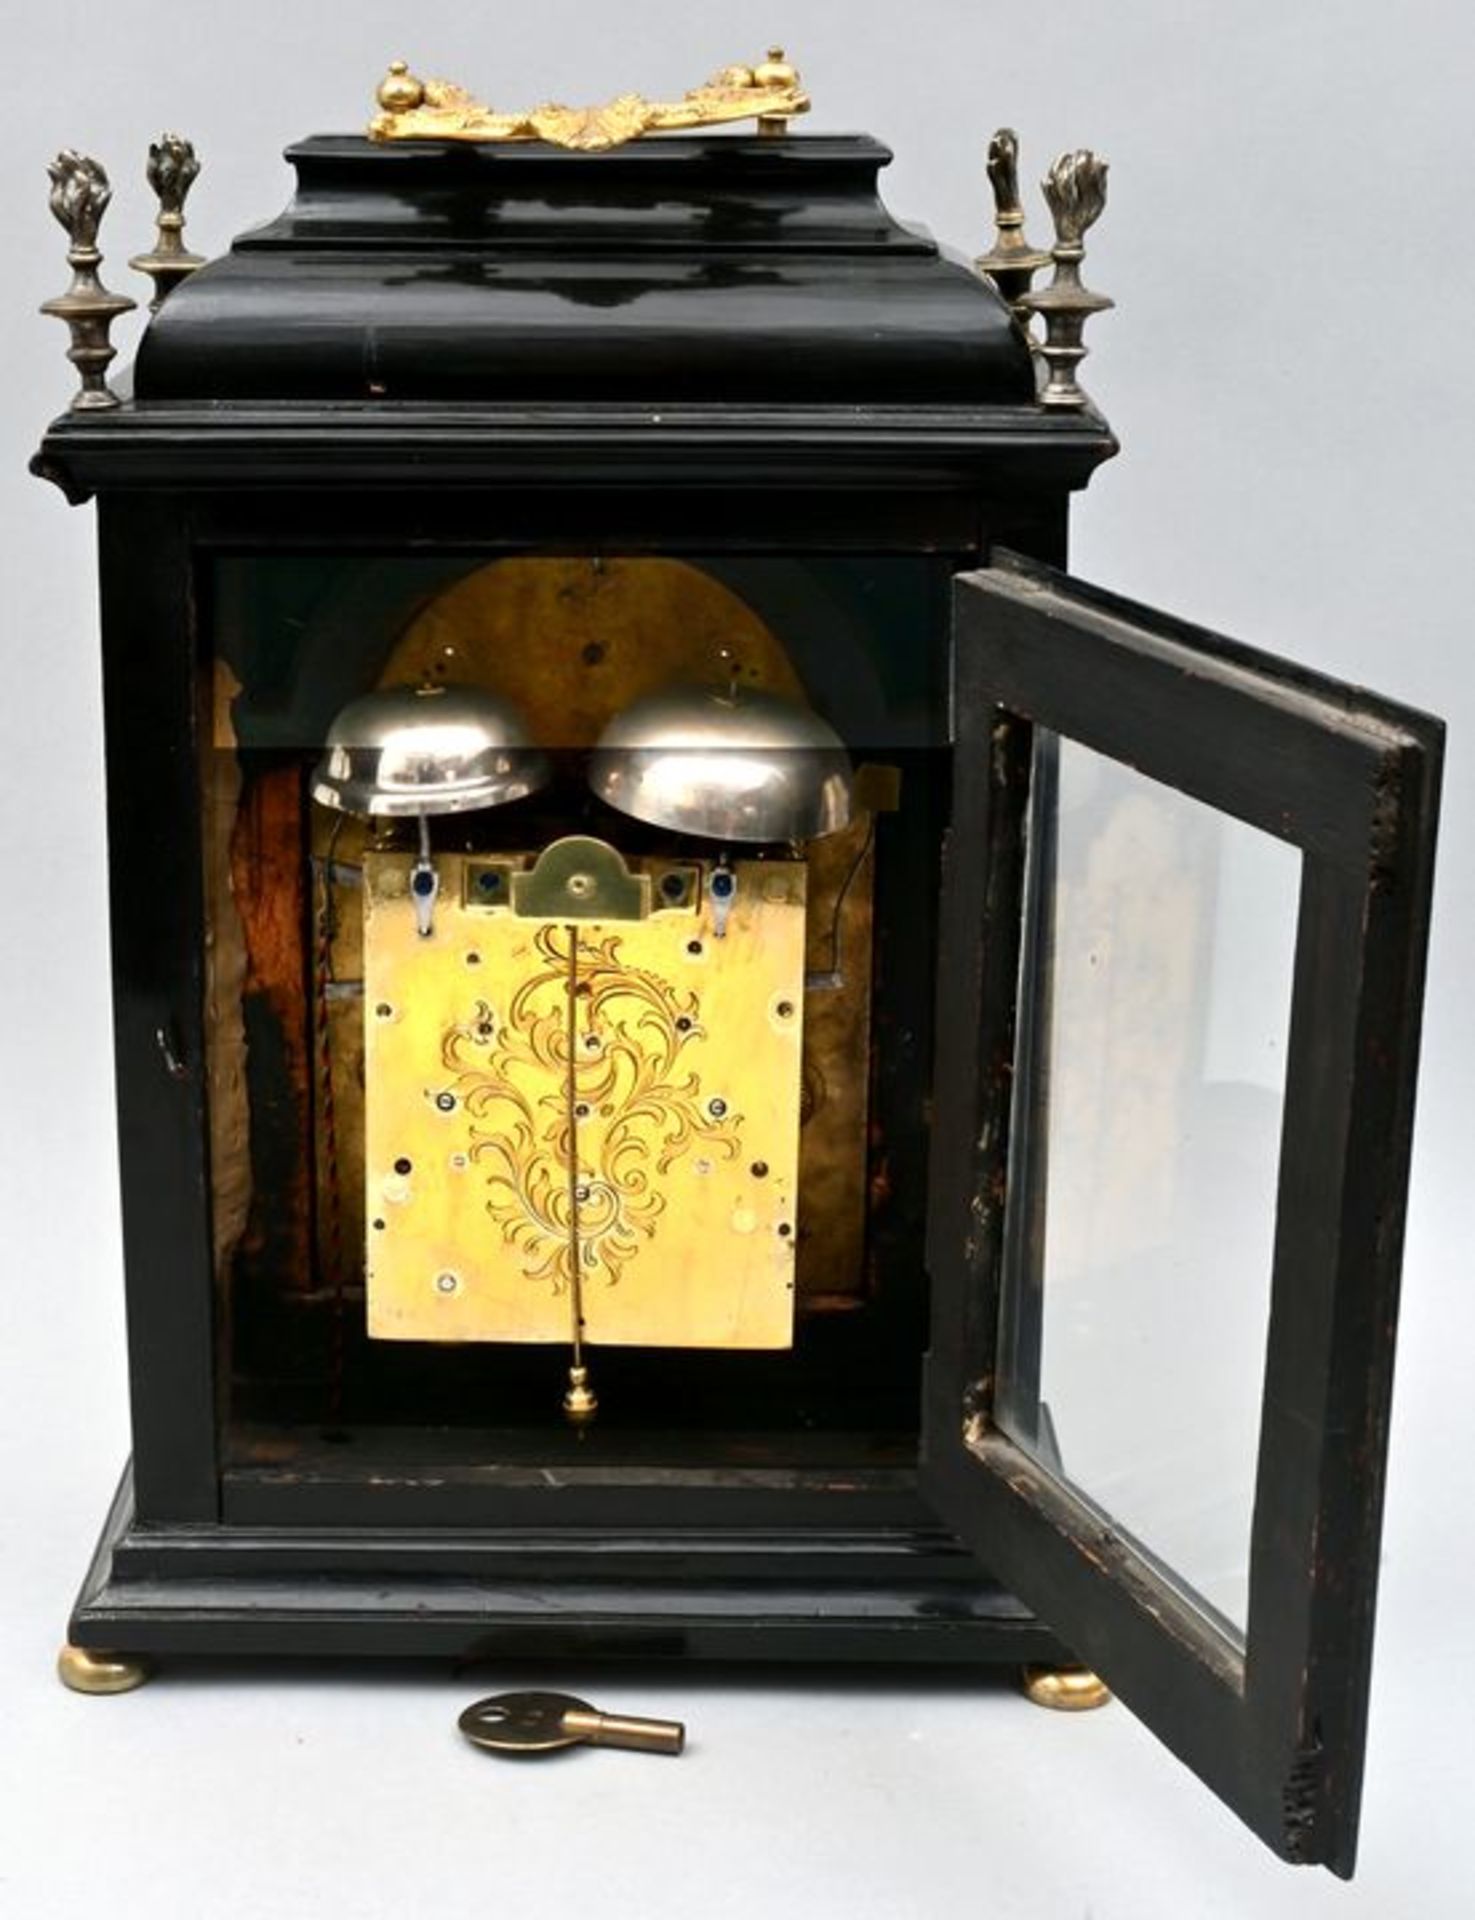 961 Stockuhr, A. Weber Buda/ bracket clock - Image 6 of 7